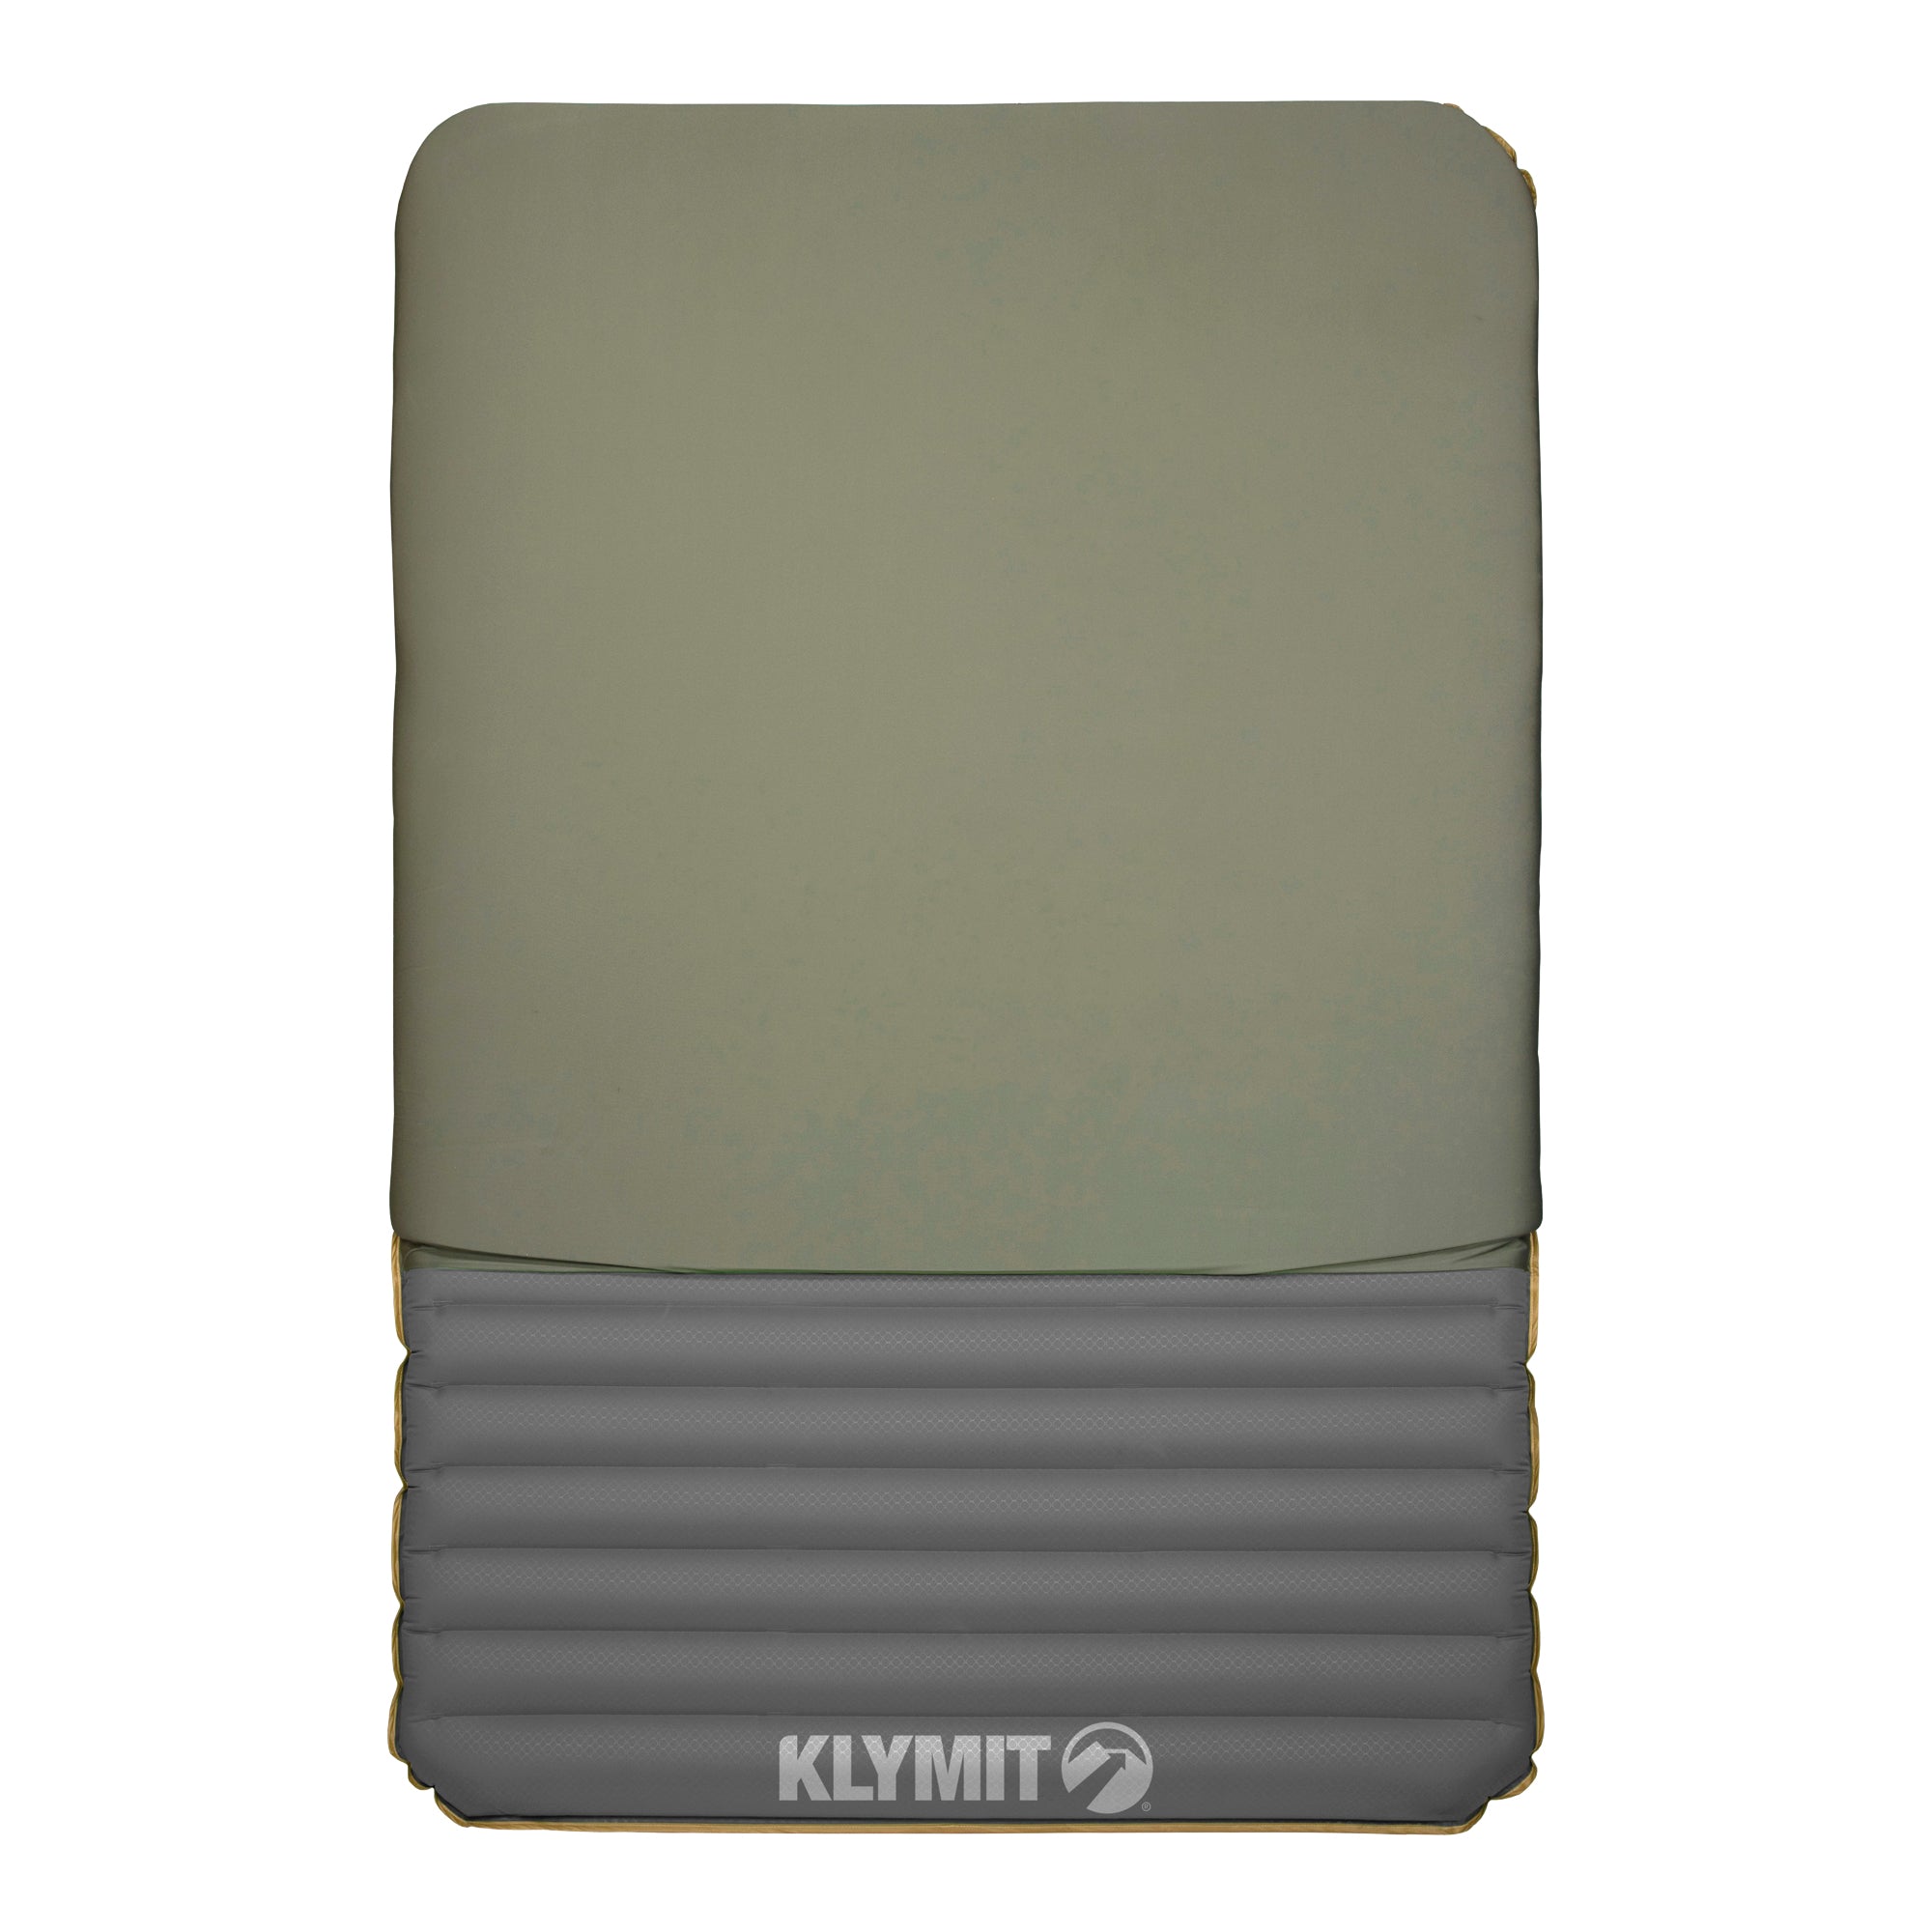 Klymaloft Sleeping Pad, Green Double, Front